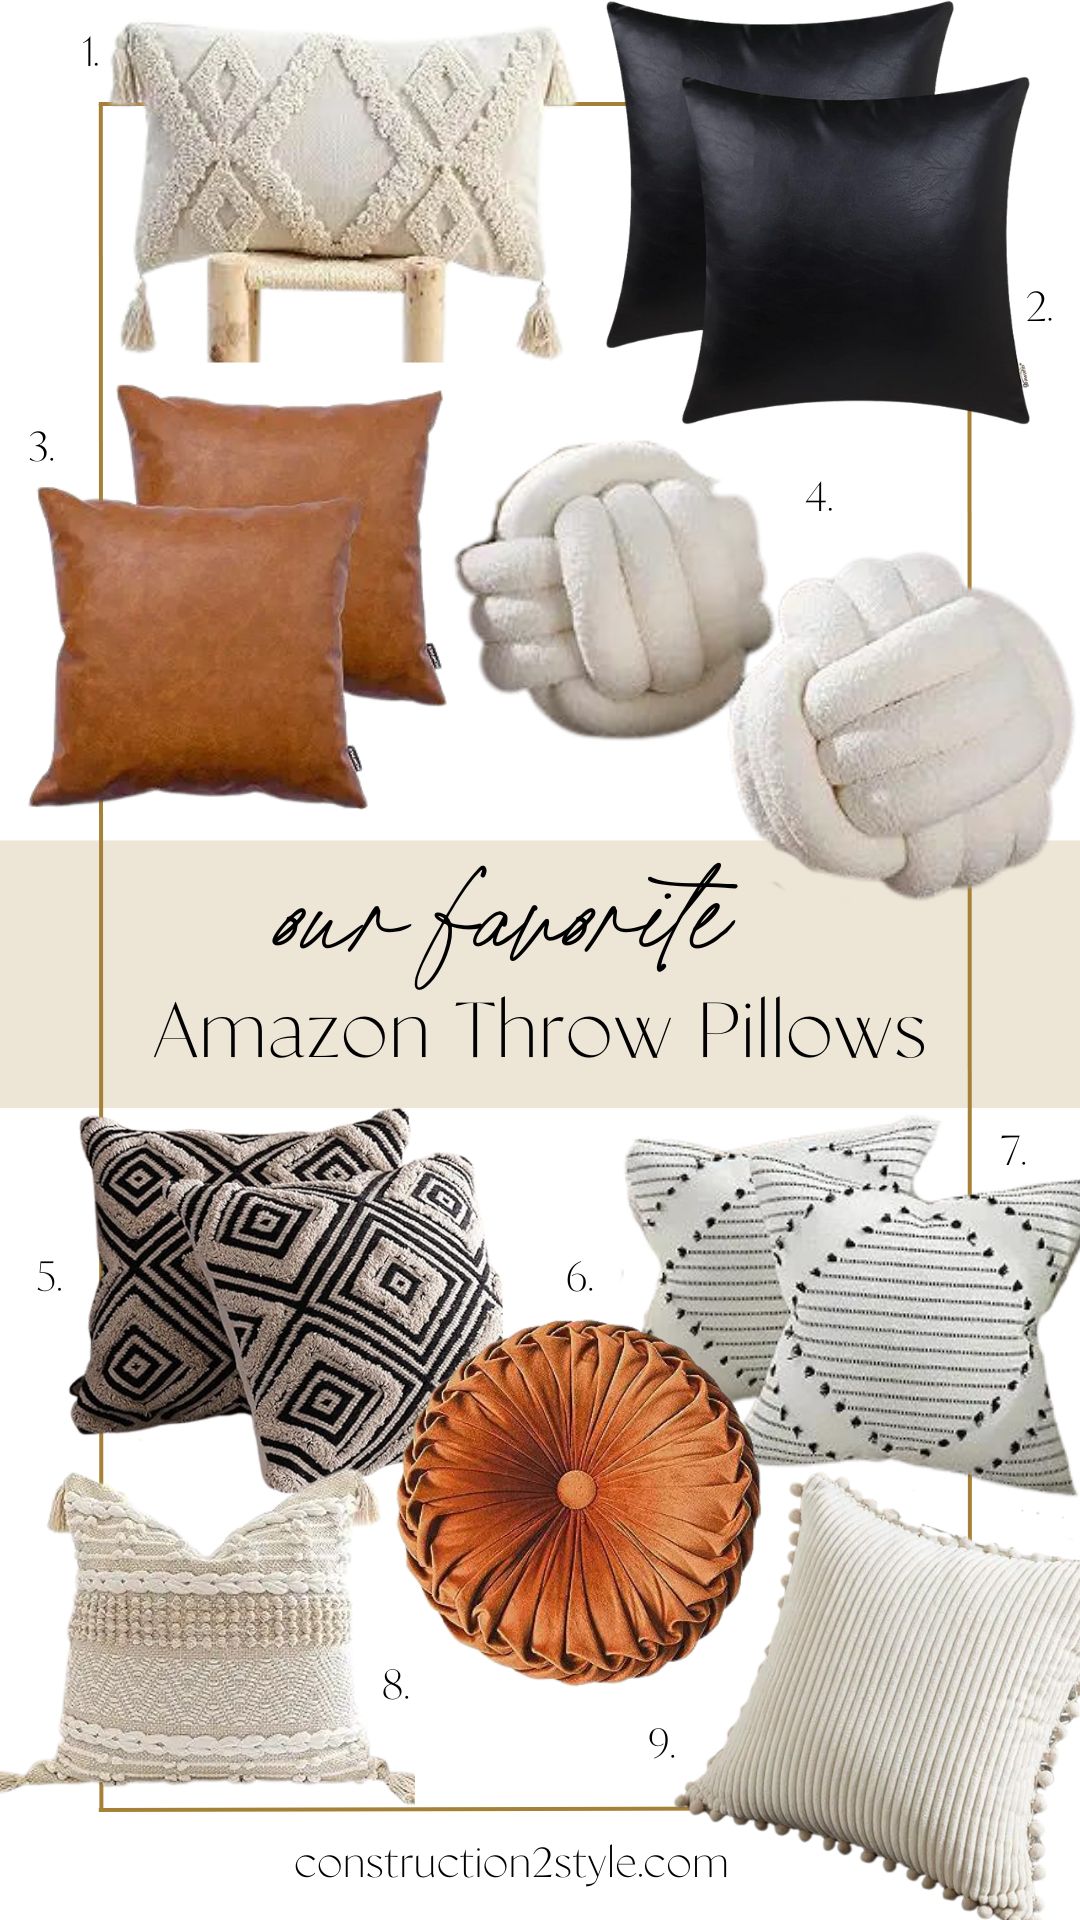 Our Favorite Amazon Throw Pillows | construction2style